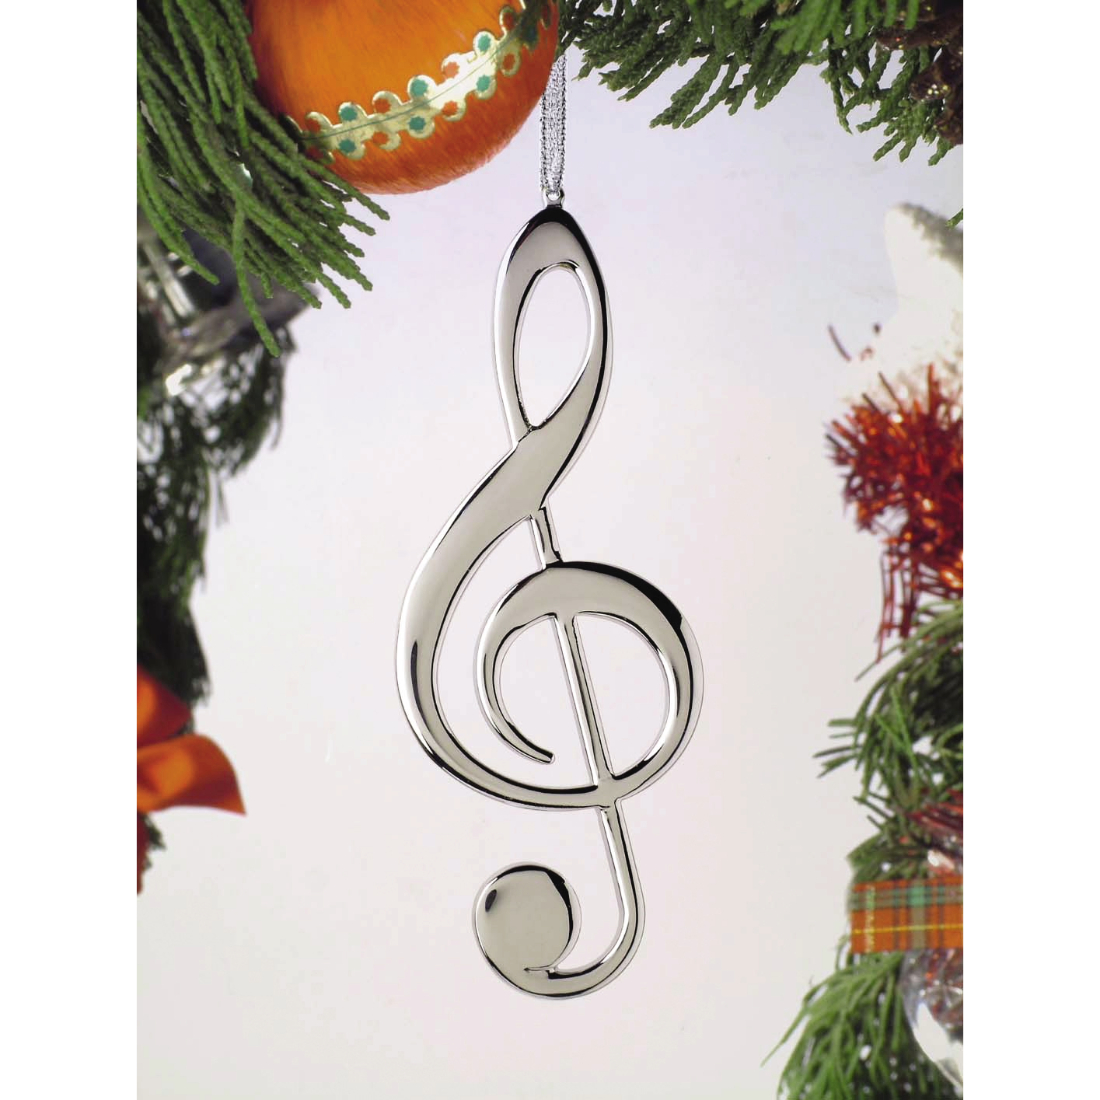 Silver treble clef shaped Christmas ornament